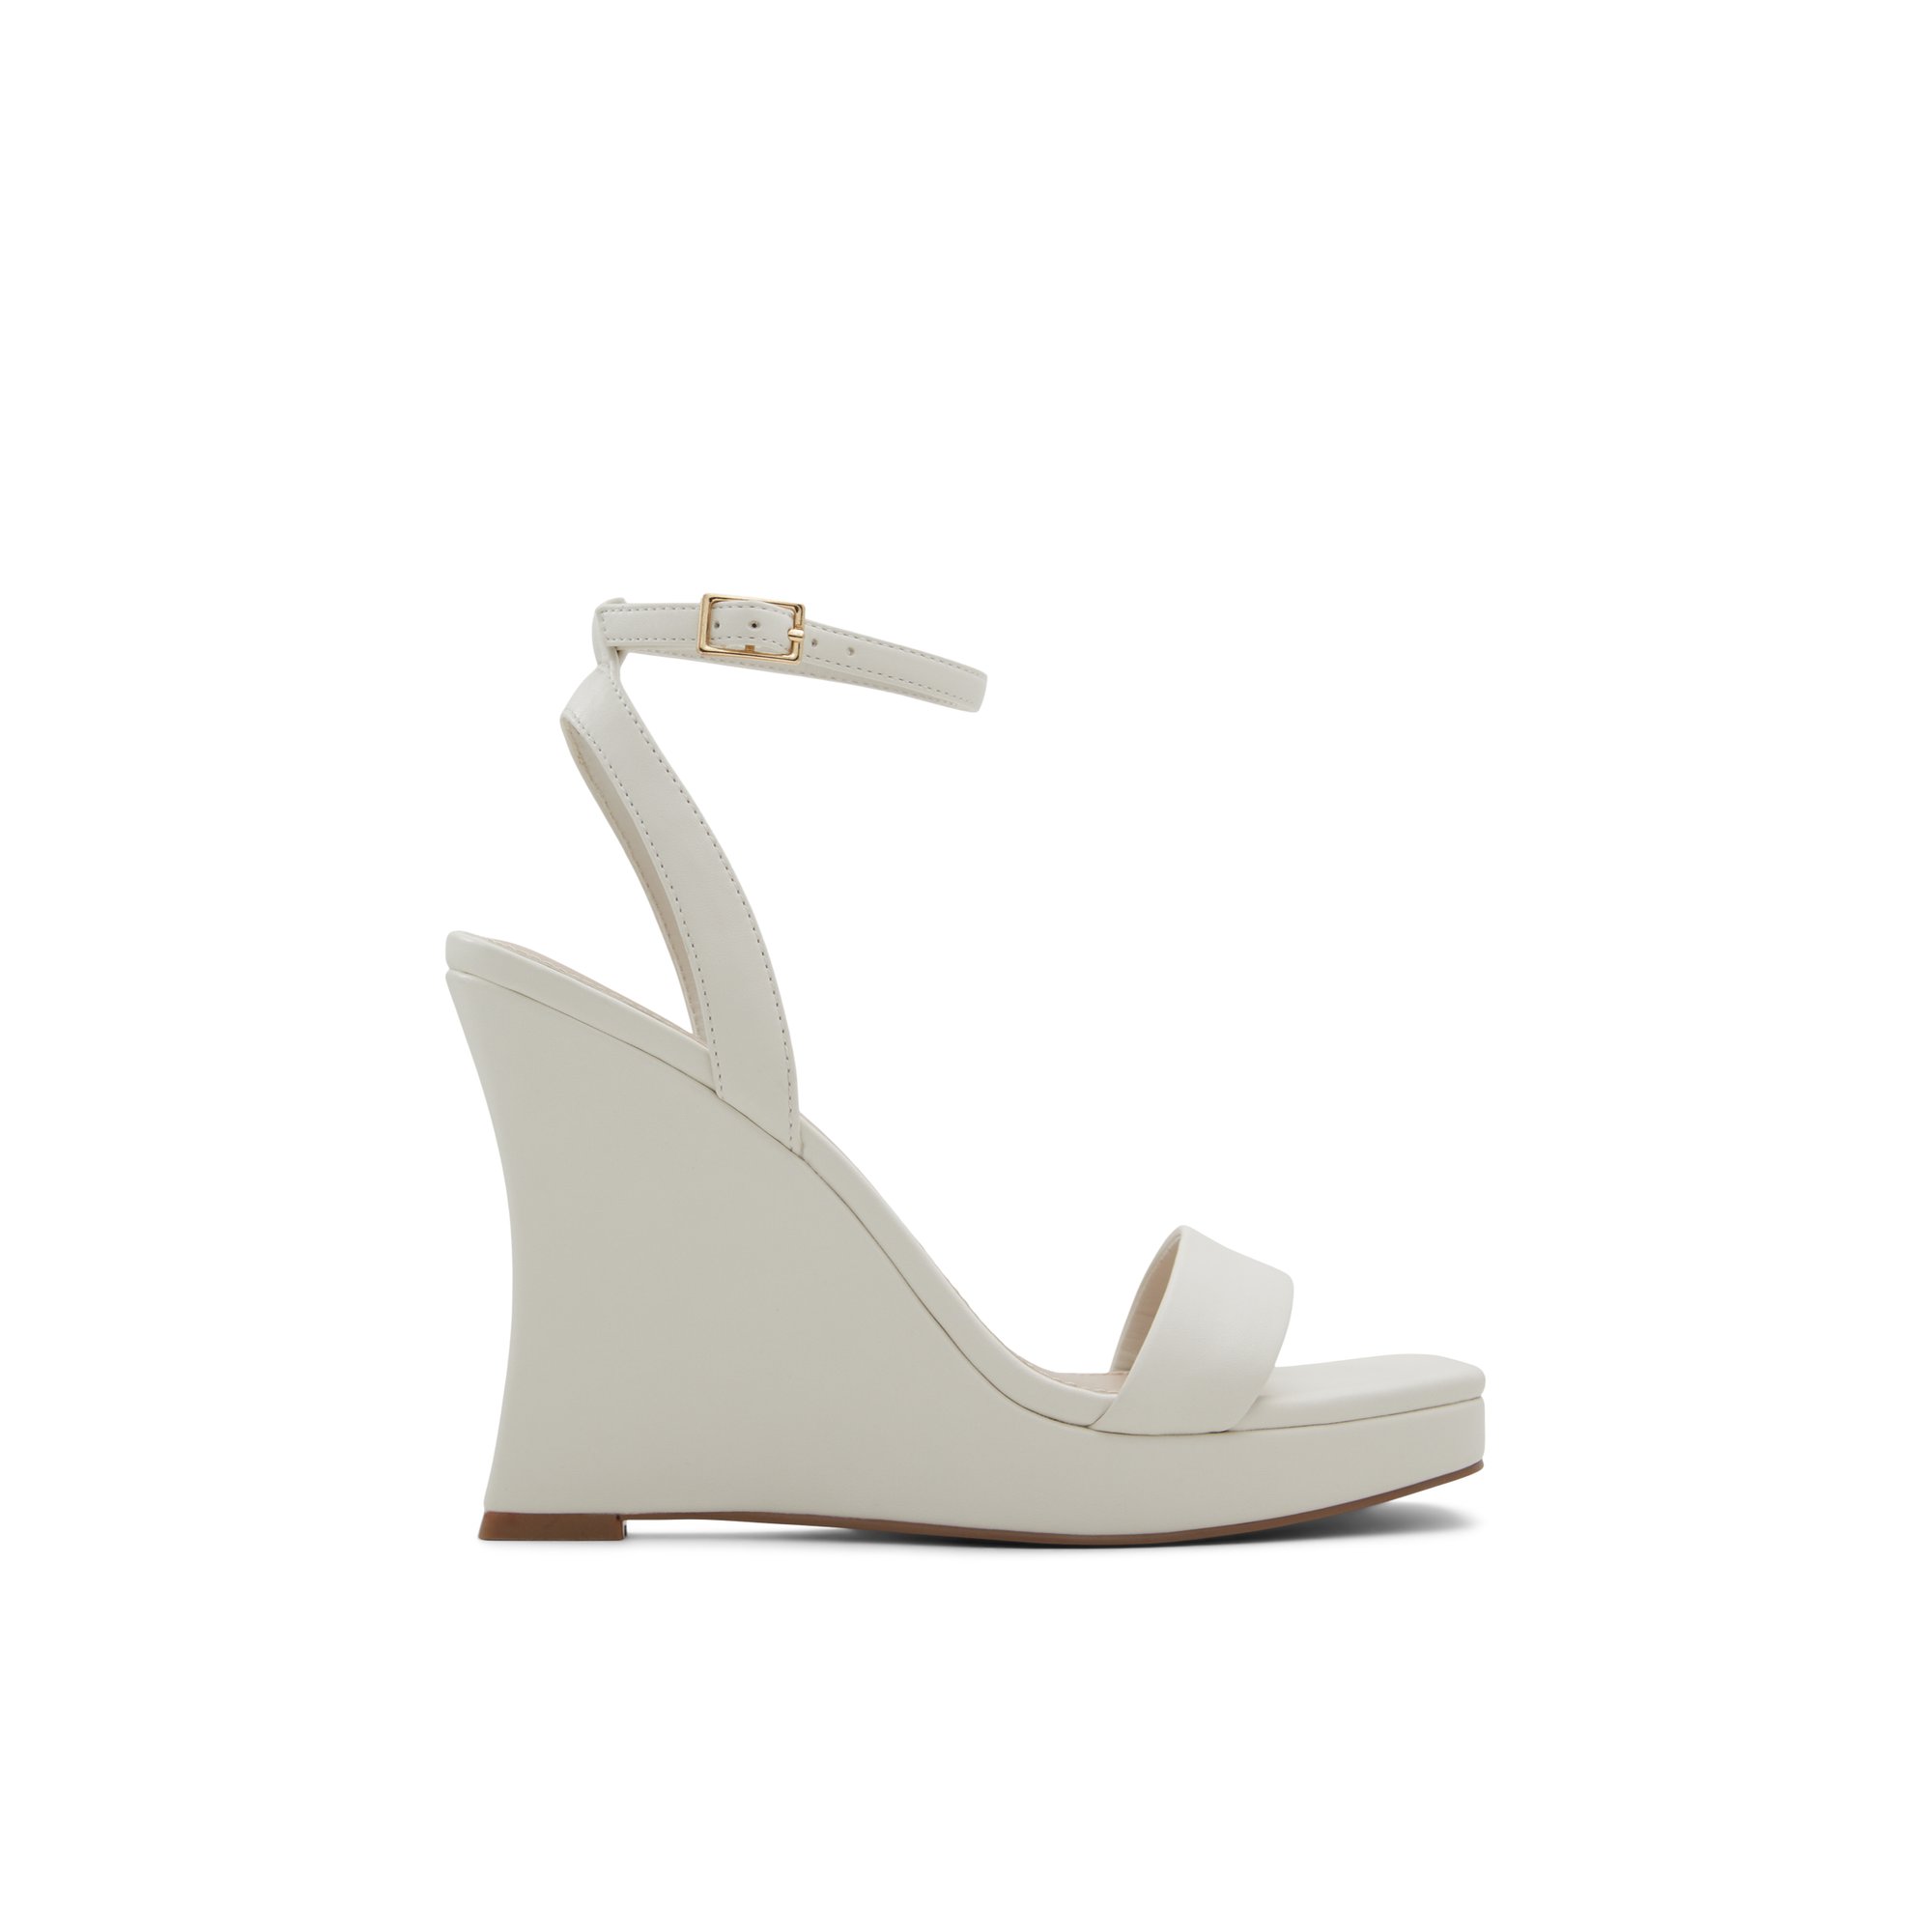 ALDO Nuala - Women's Sandals Wedges - White